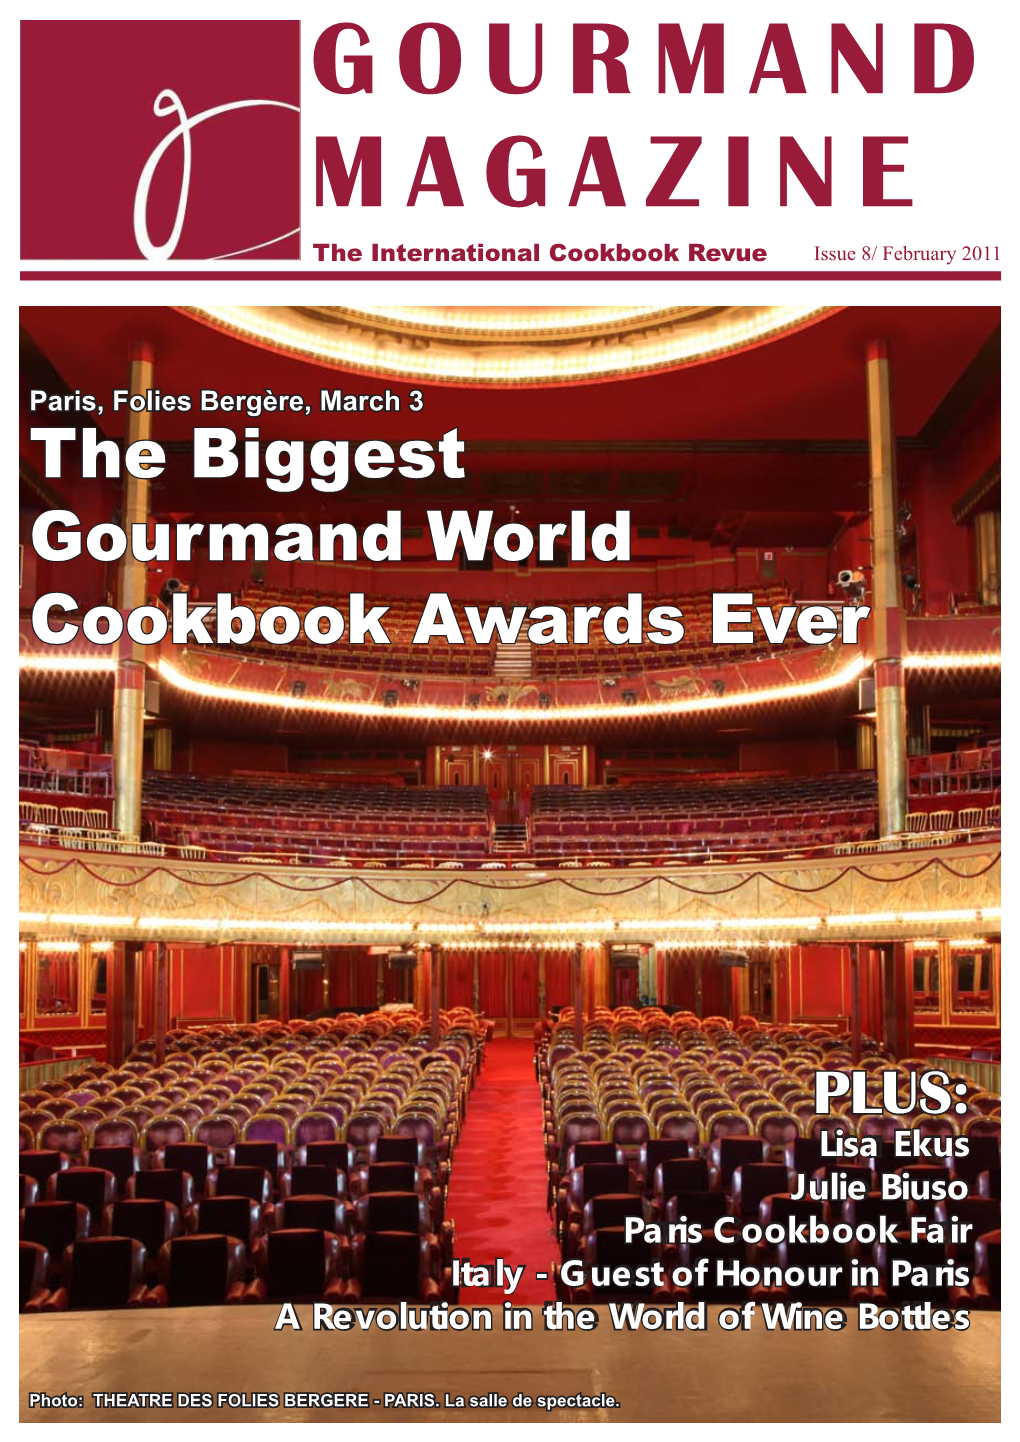 GOURMAND MAGAZINE the International Cookbook Revue Issue 8/ February 2011